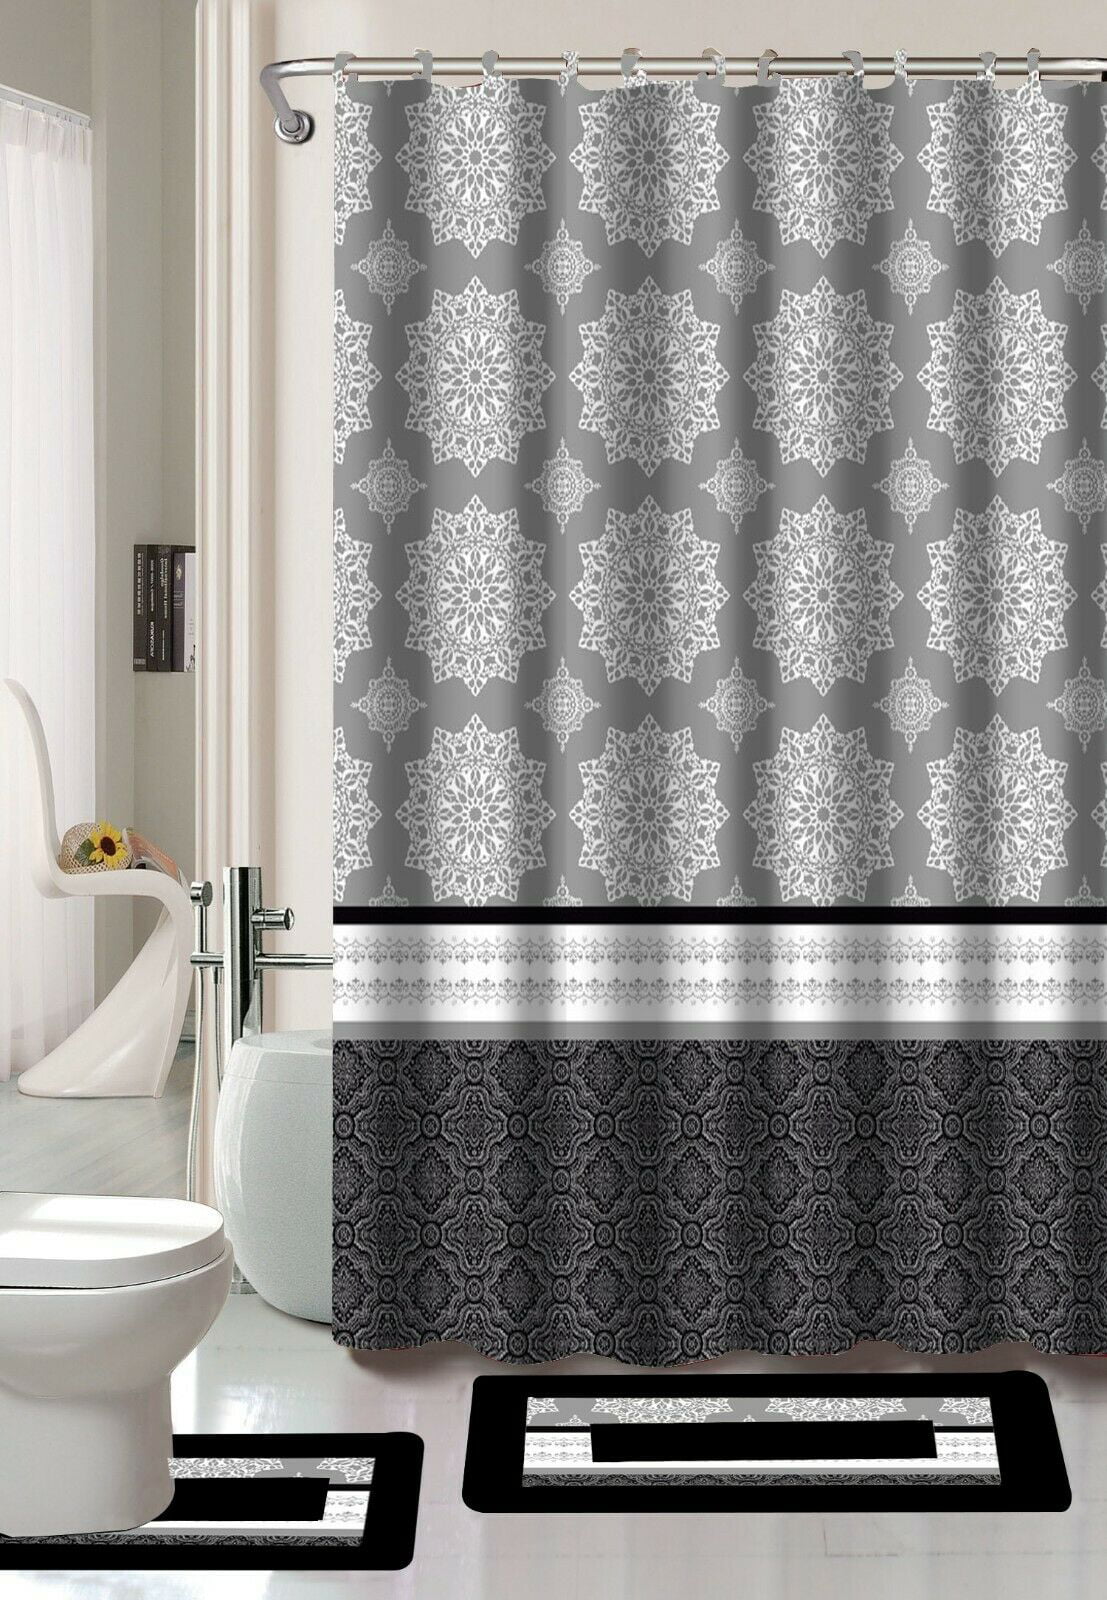 Purple Rose Skull Shower Curtain Bath Mat Toilet Cover Rugs Bathroom Decor 